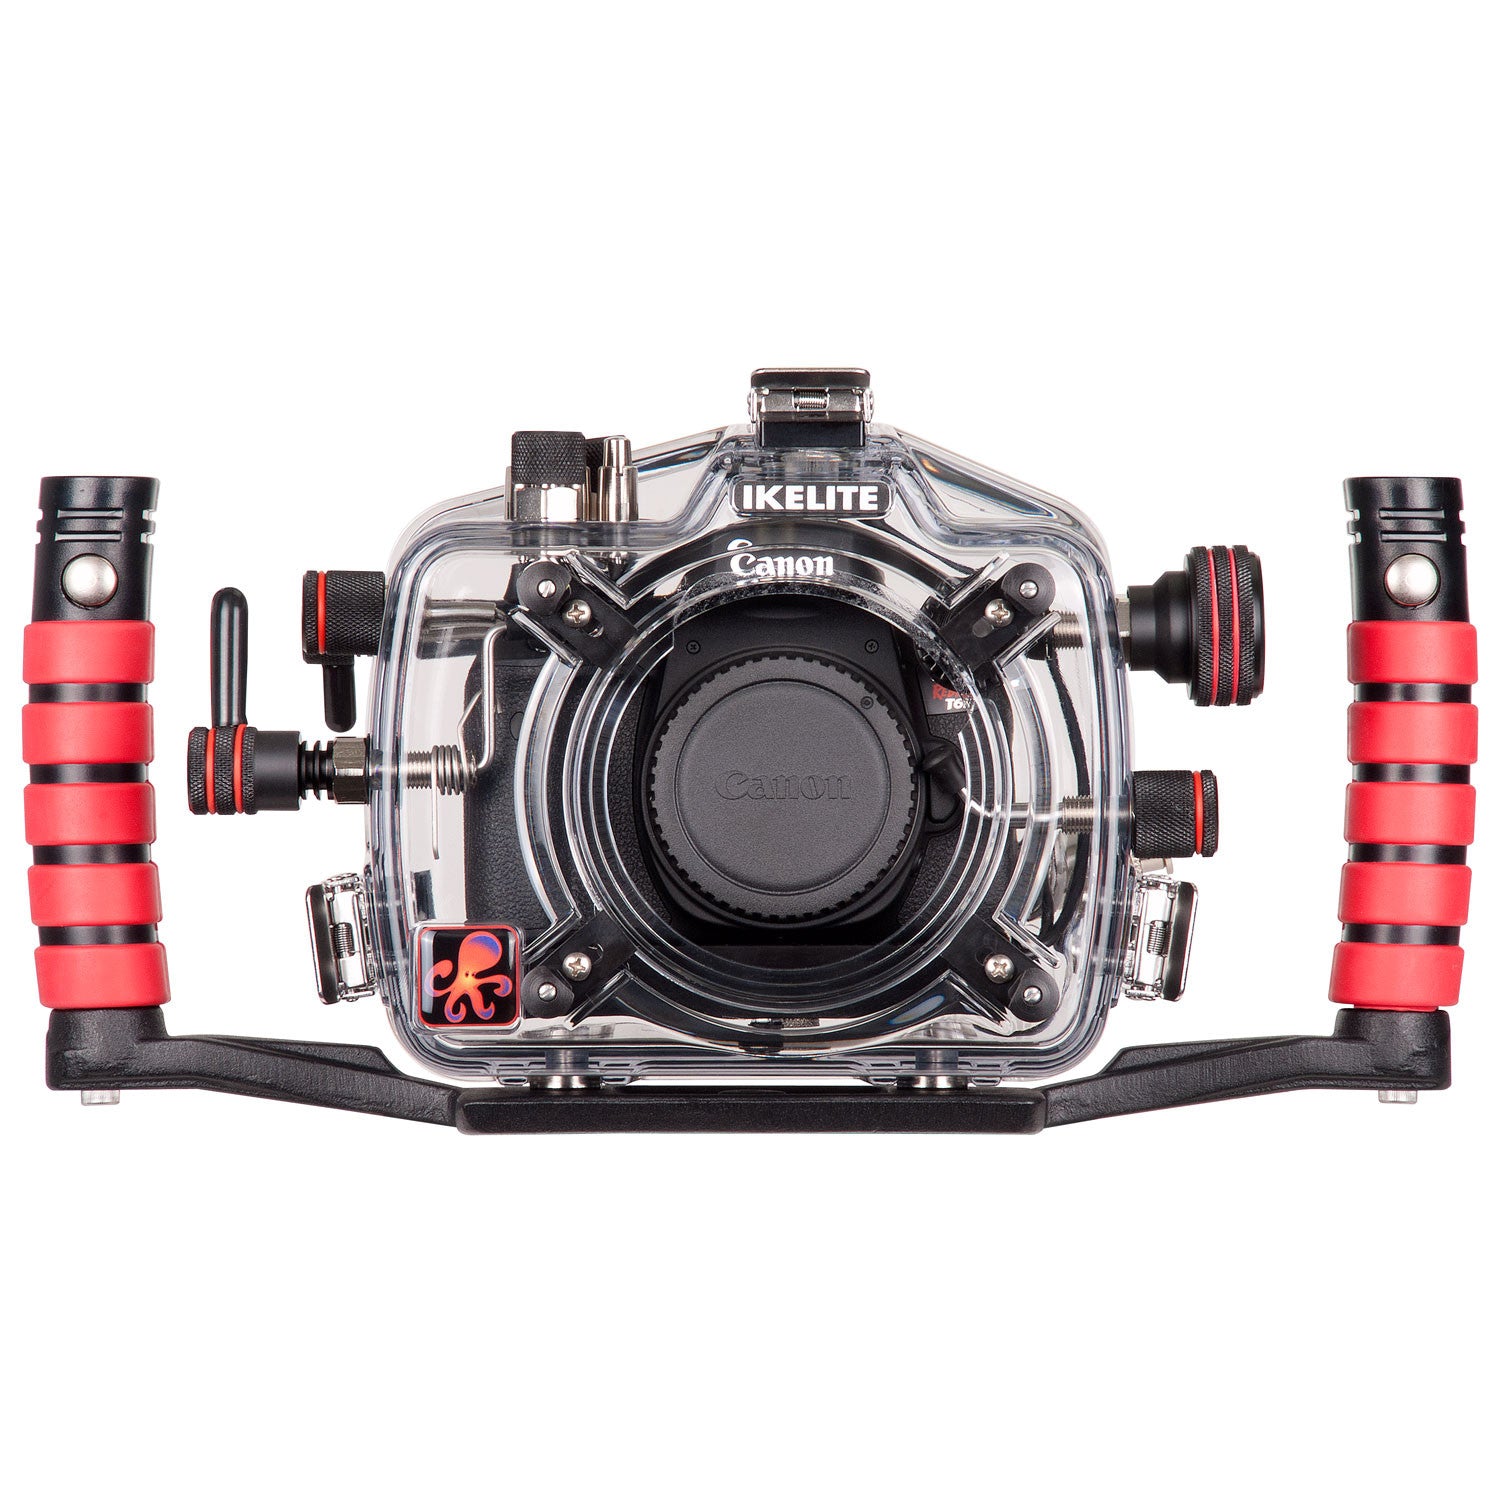 200FL Underwater TTL Housing for Canon EOS 750D, Rebel T6i, Kiss X8i D